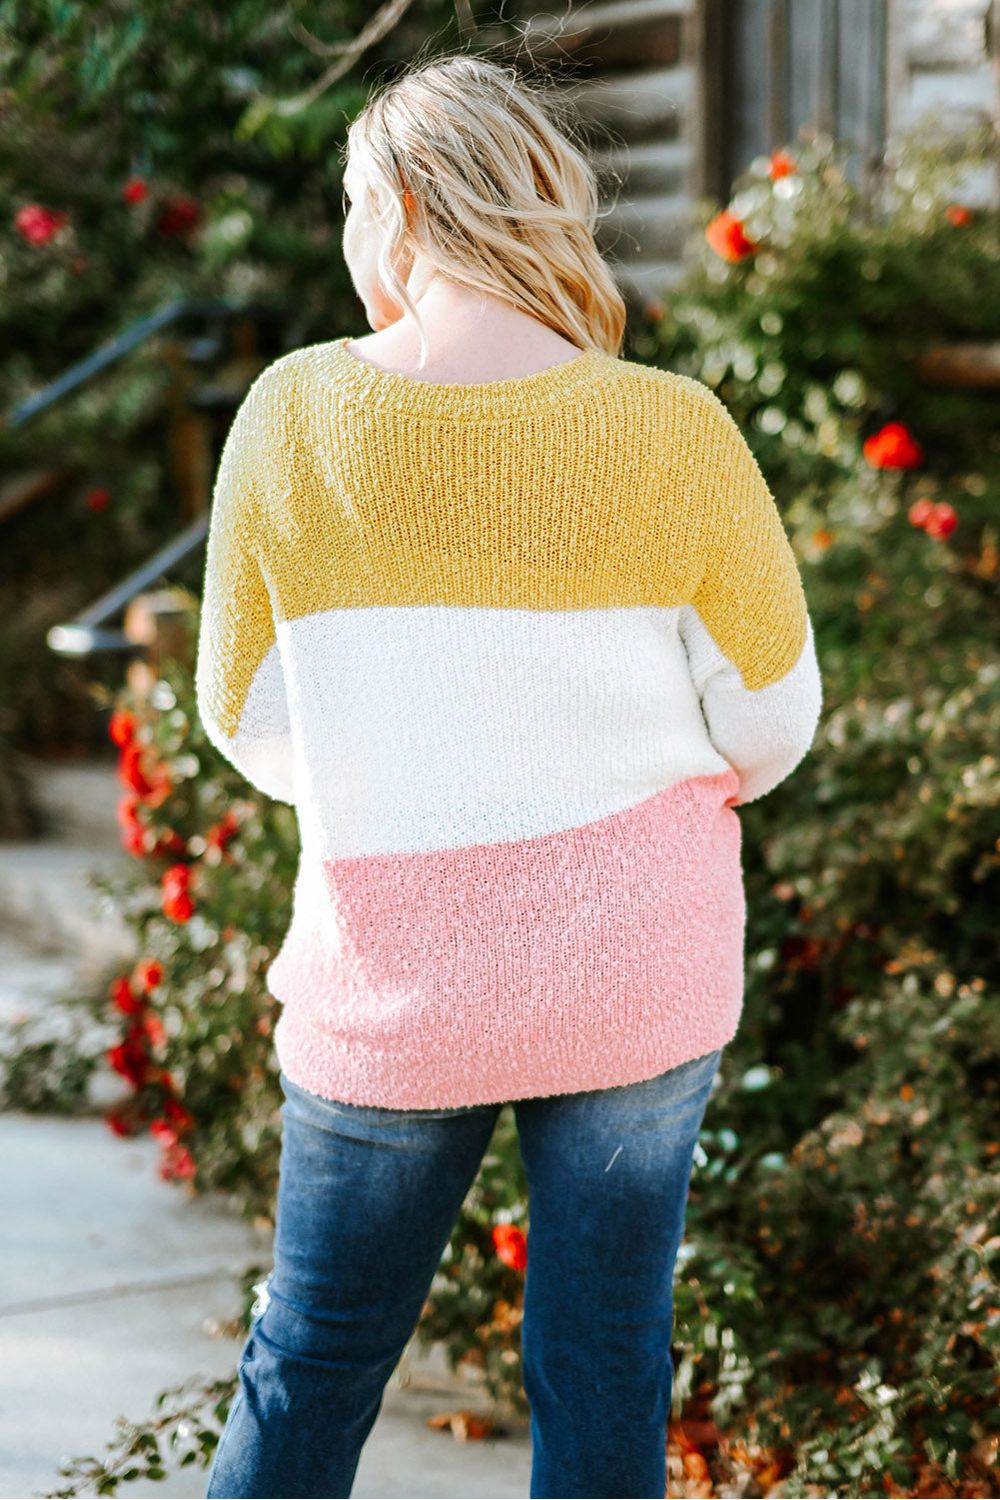 Plus Size Women Color Block Round Neck Sweater